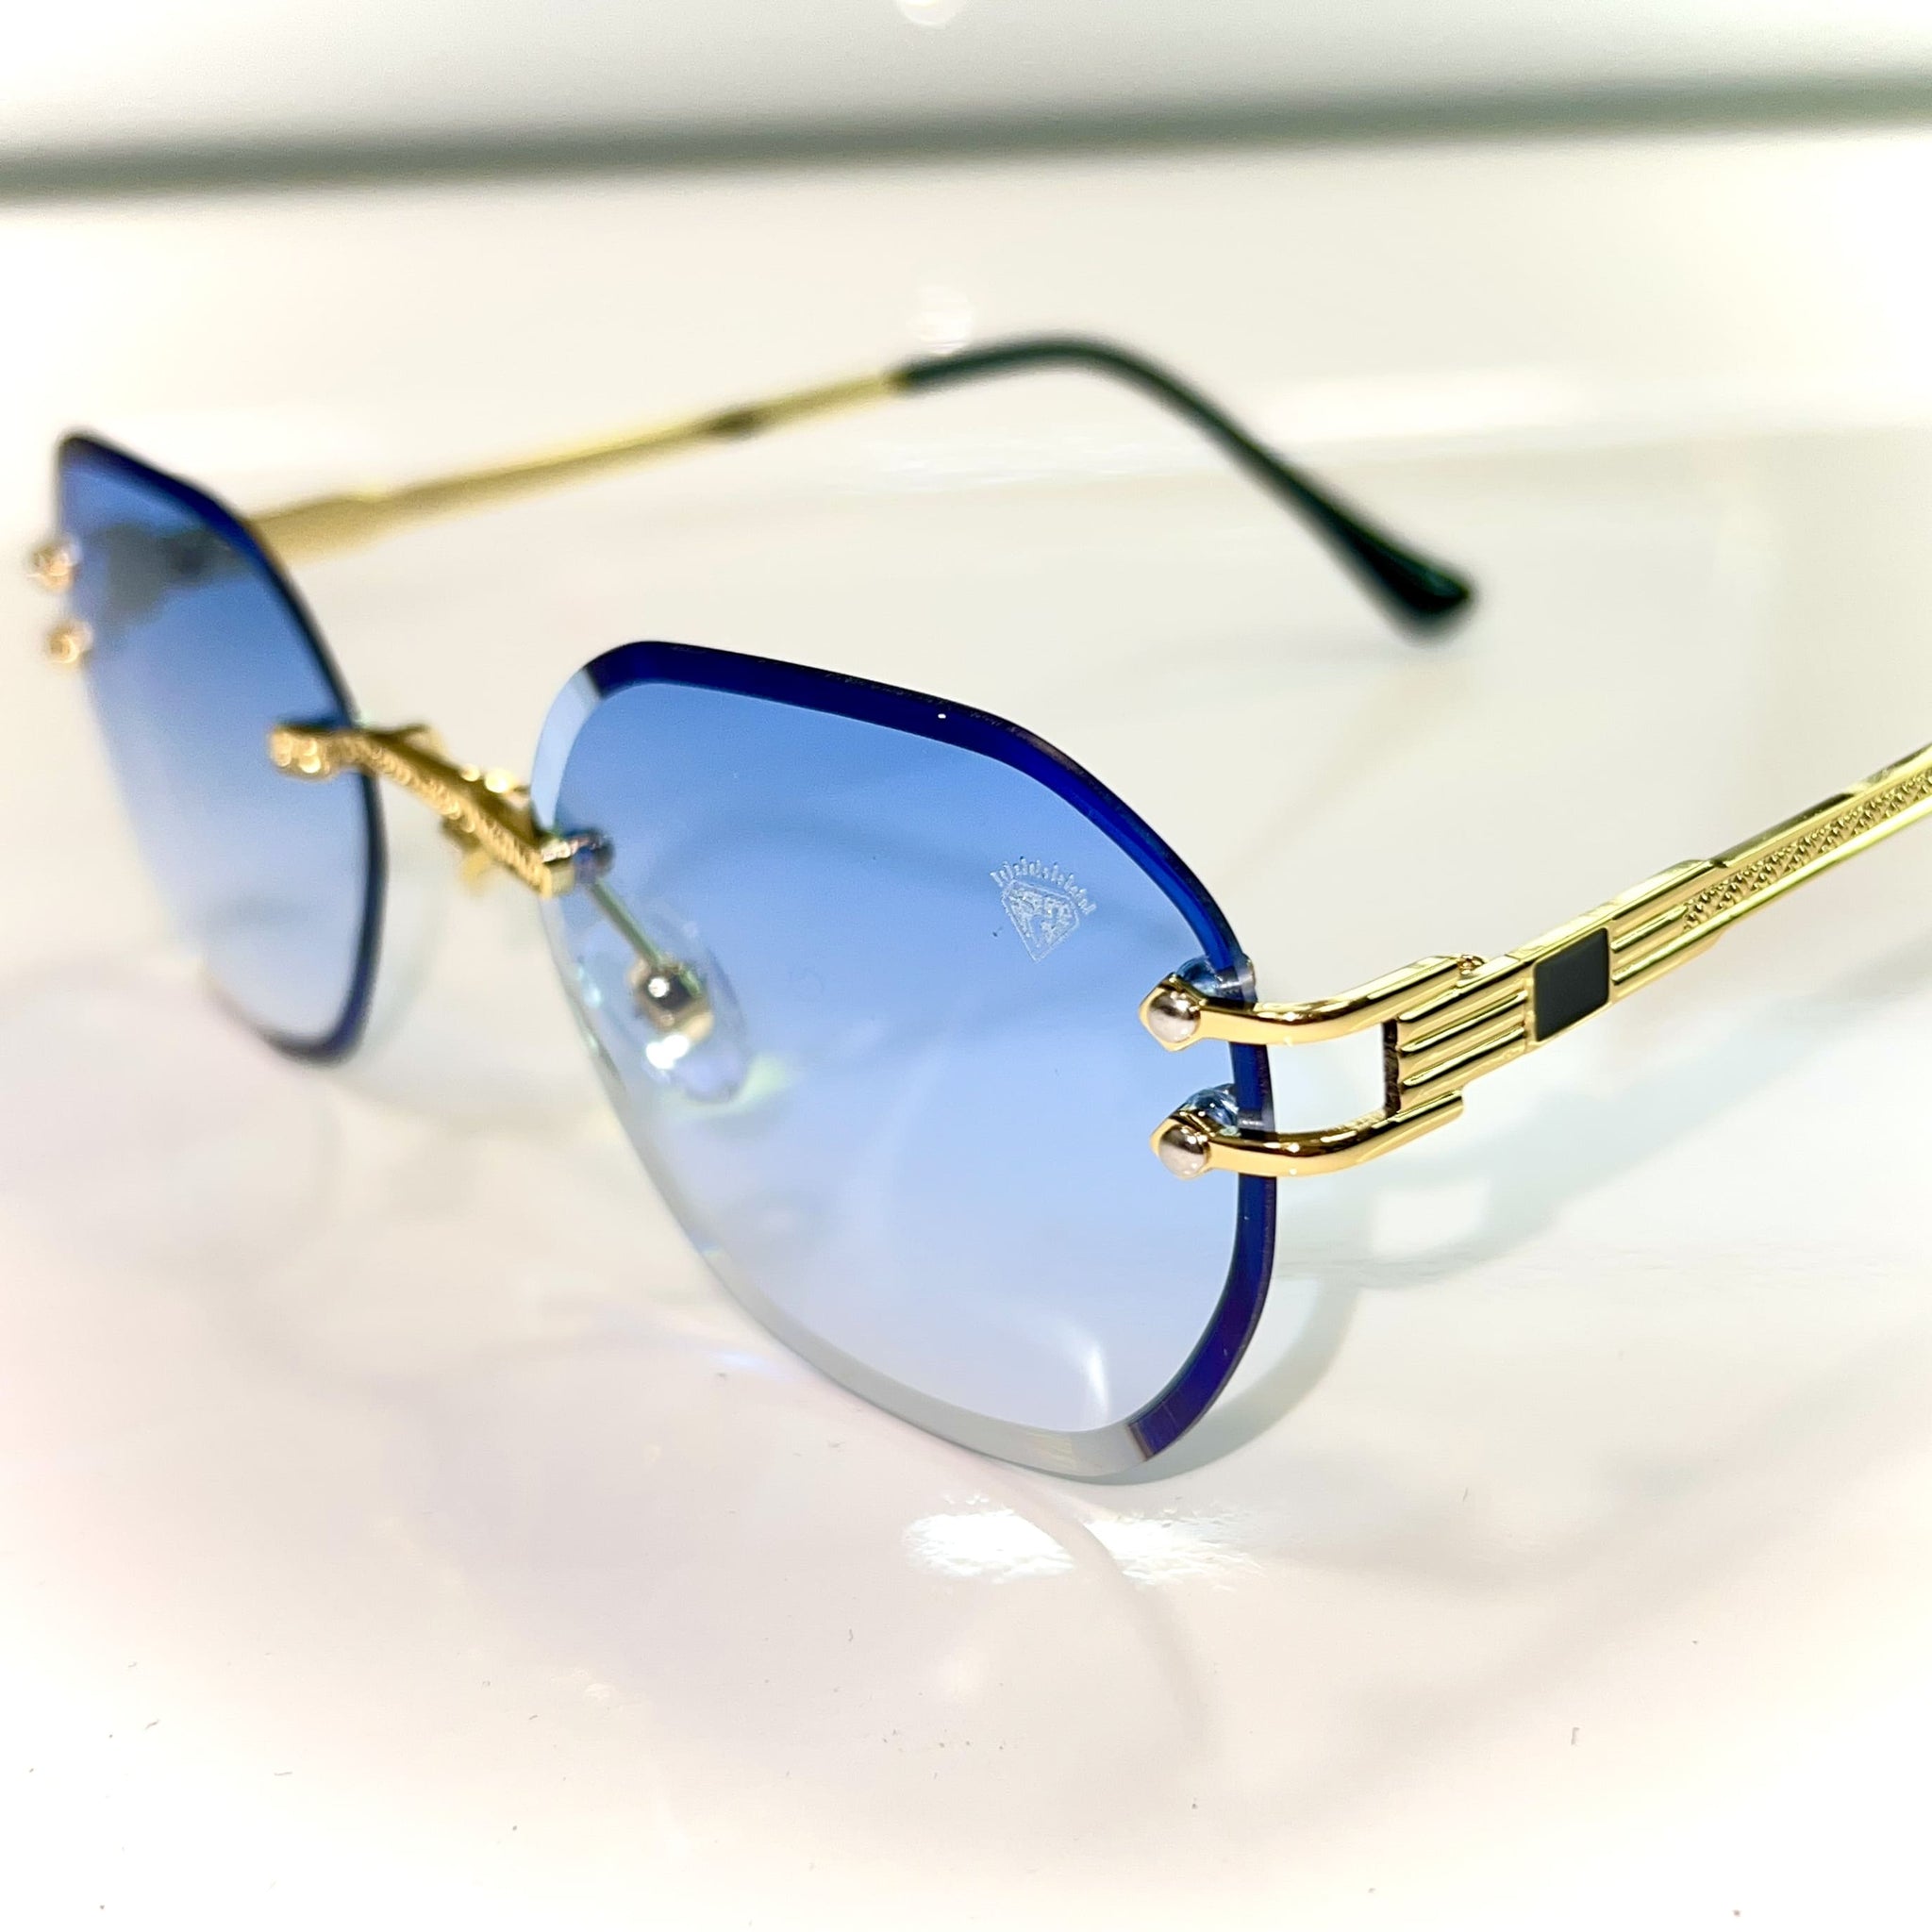 Pharaoh Glasses - Diamond cut / 14 carat gold plated - Blue Shade - Sehgal Glasses